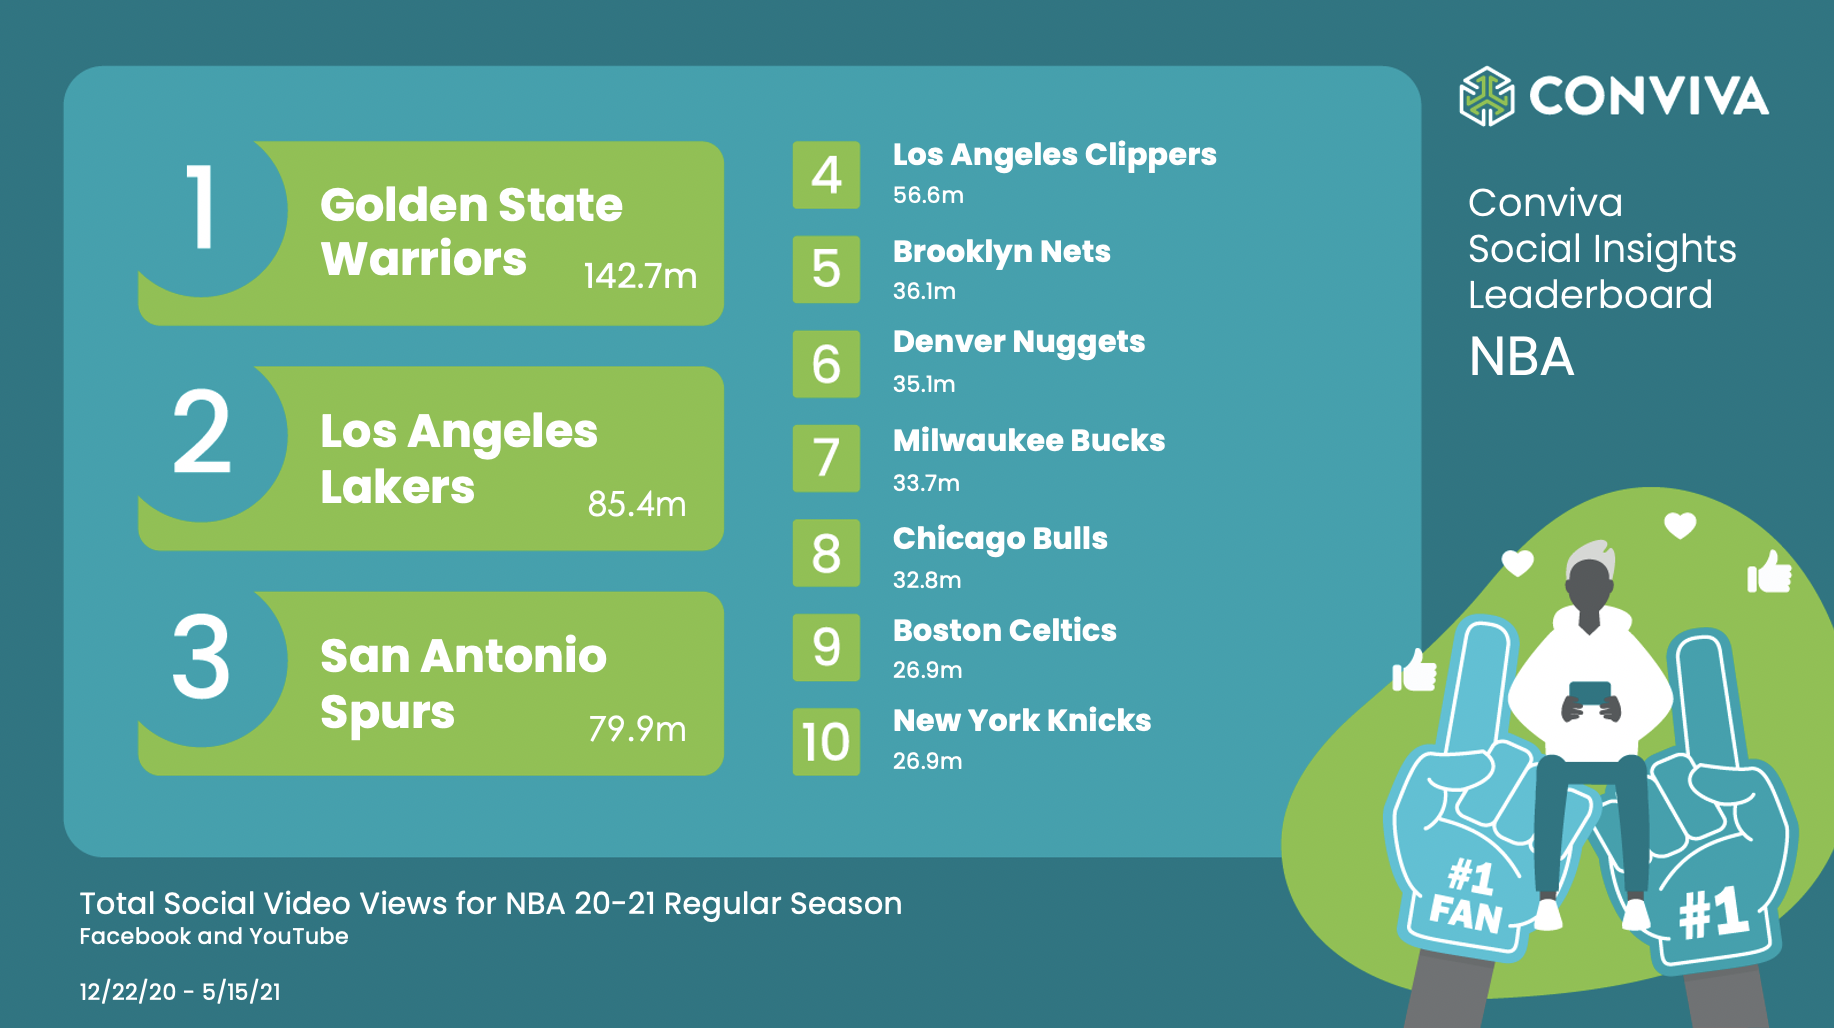 Conviva's Social Insights Leaderboard: Most Views on Facebook & YouTube for 2021 NBA Regular Season